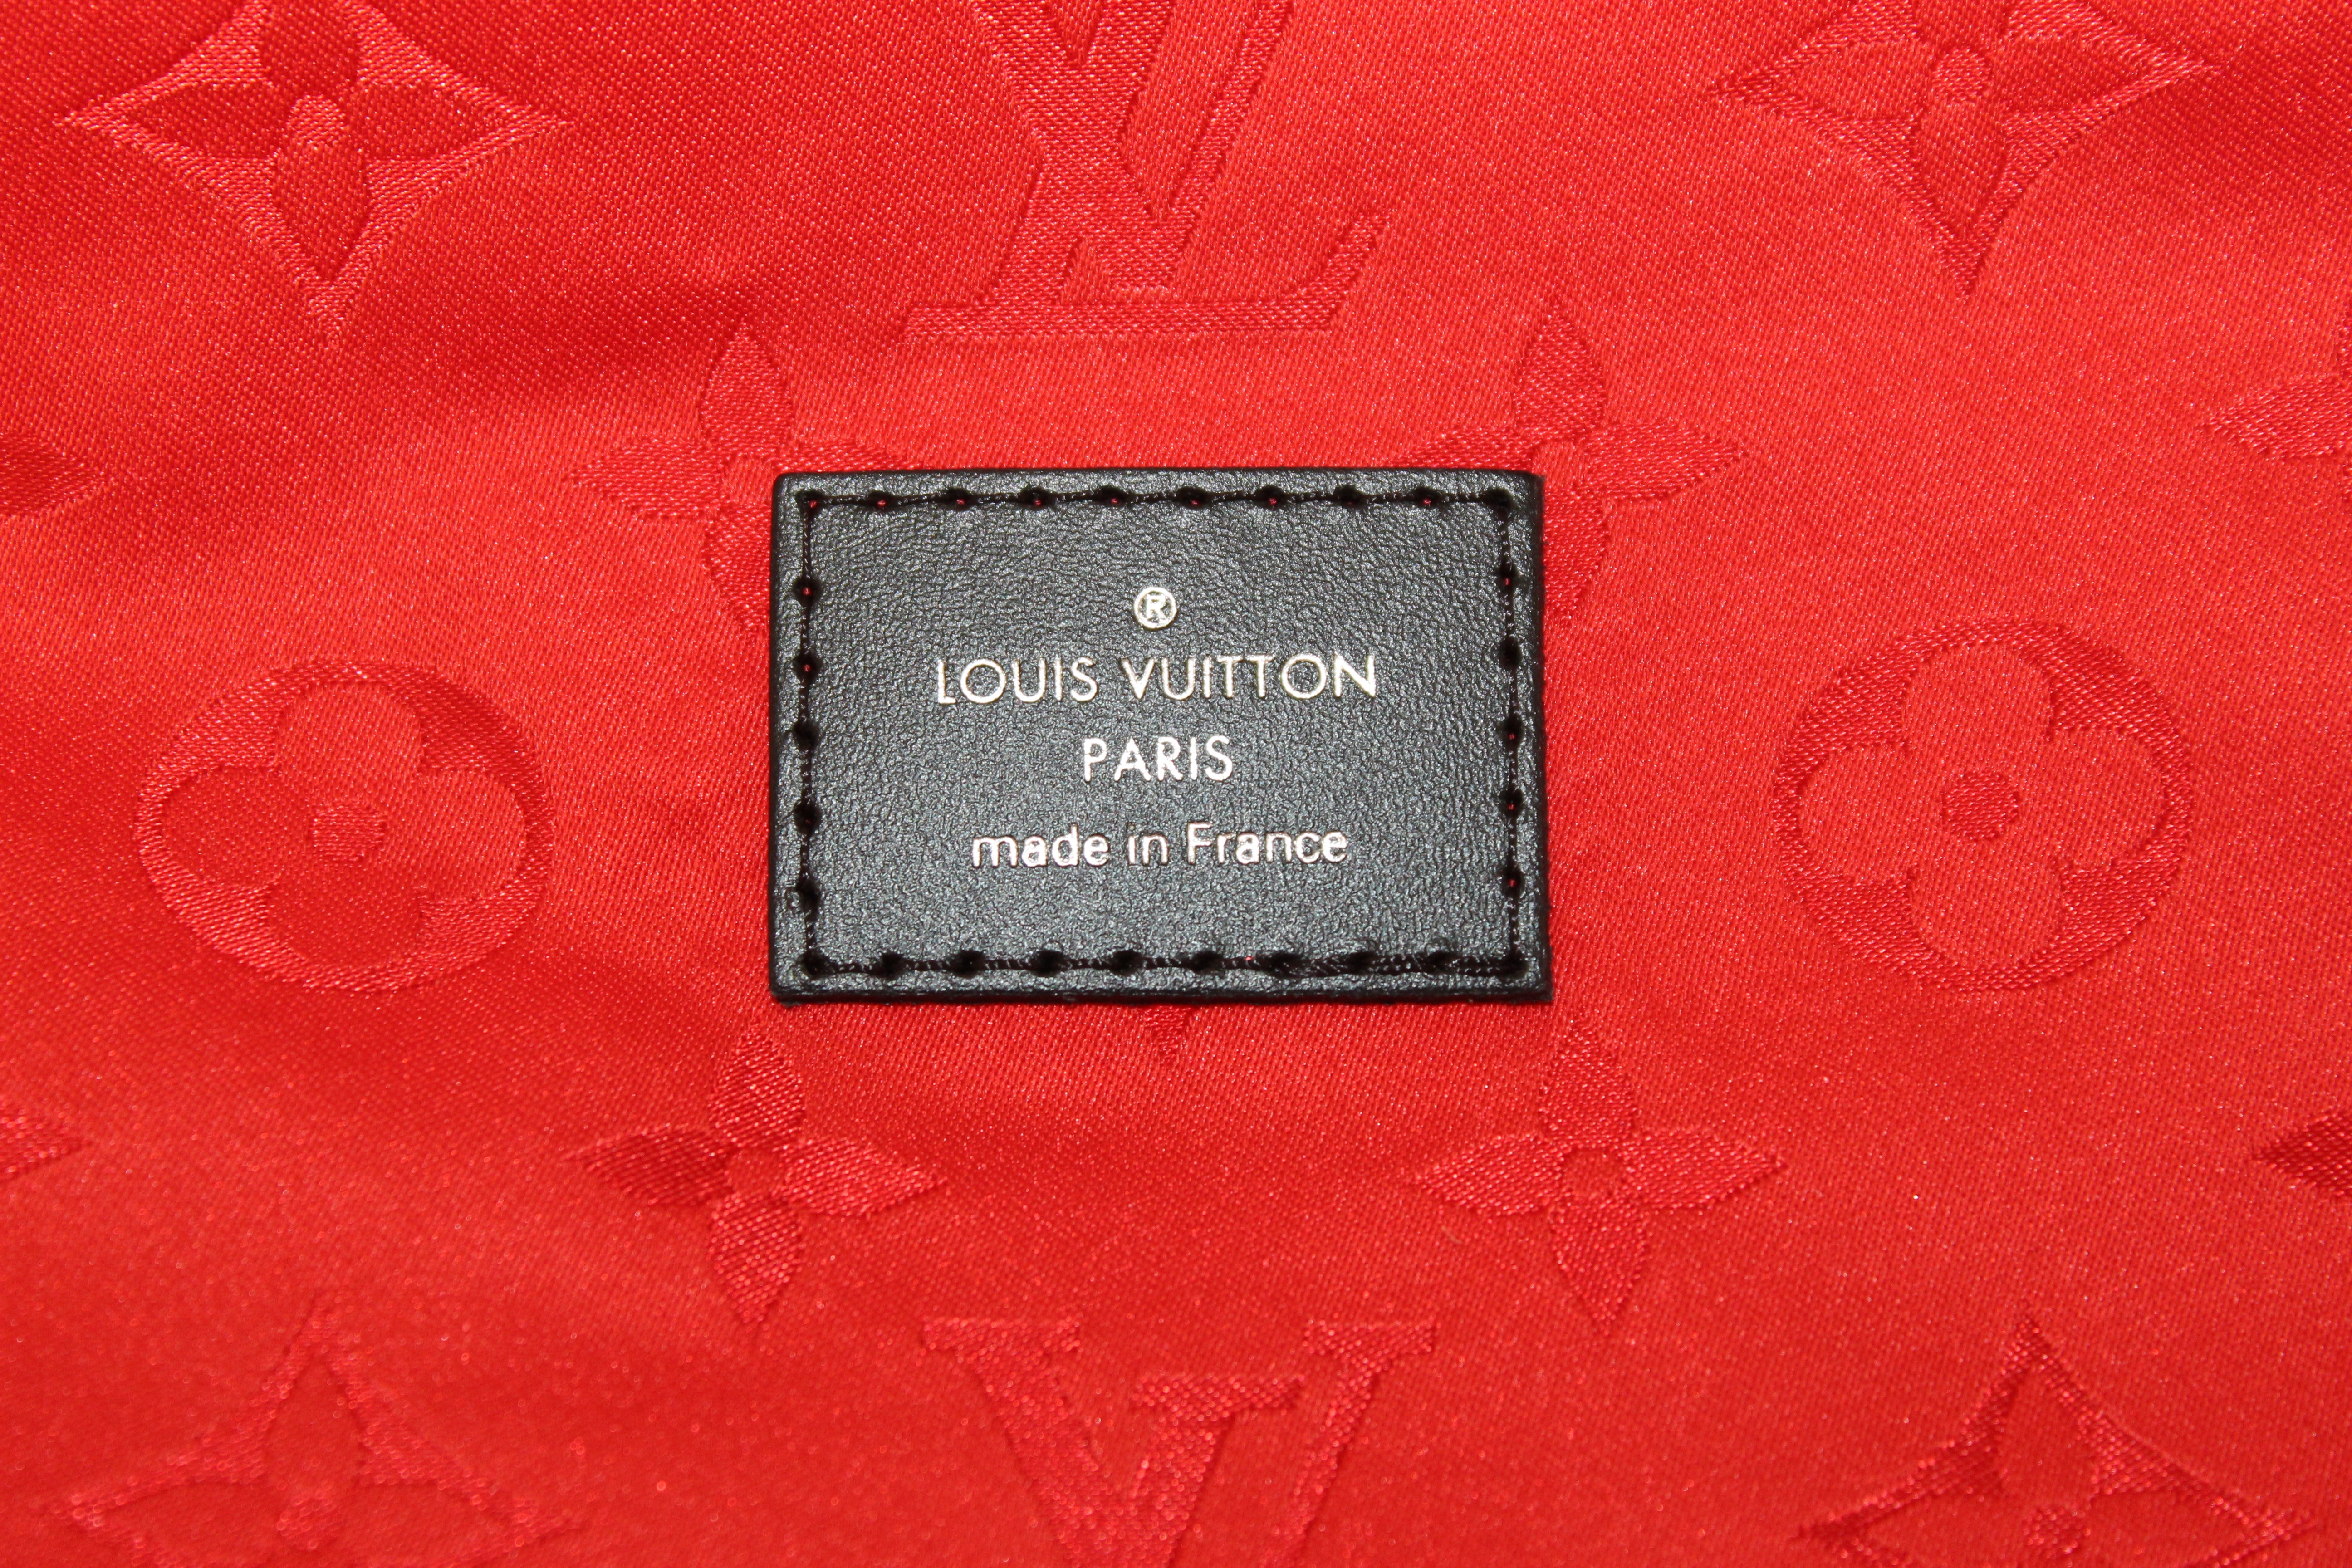 Authentic Louis Vuitton Limited Edition Nicolas Ghesquiere's